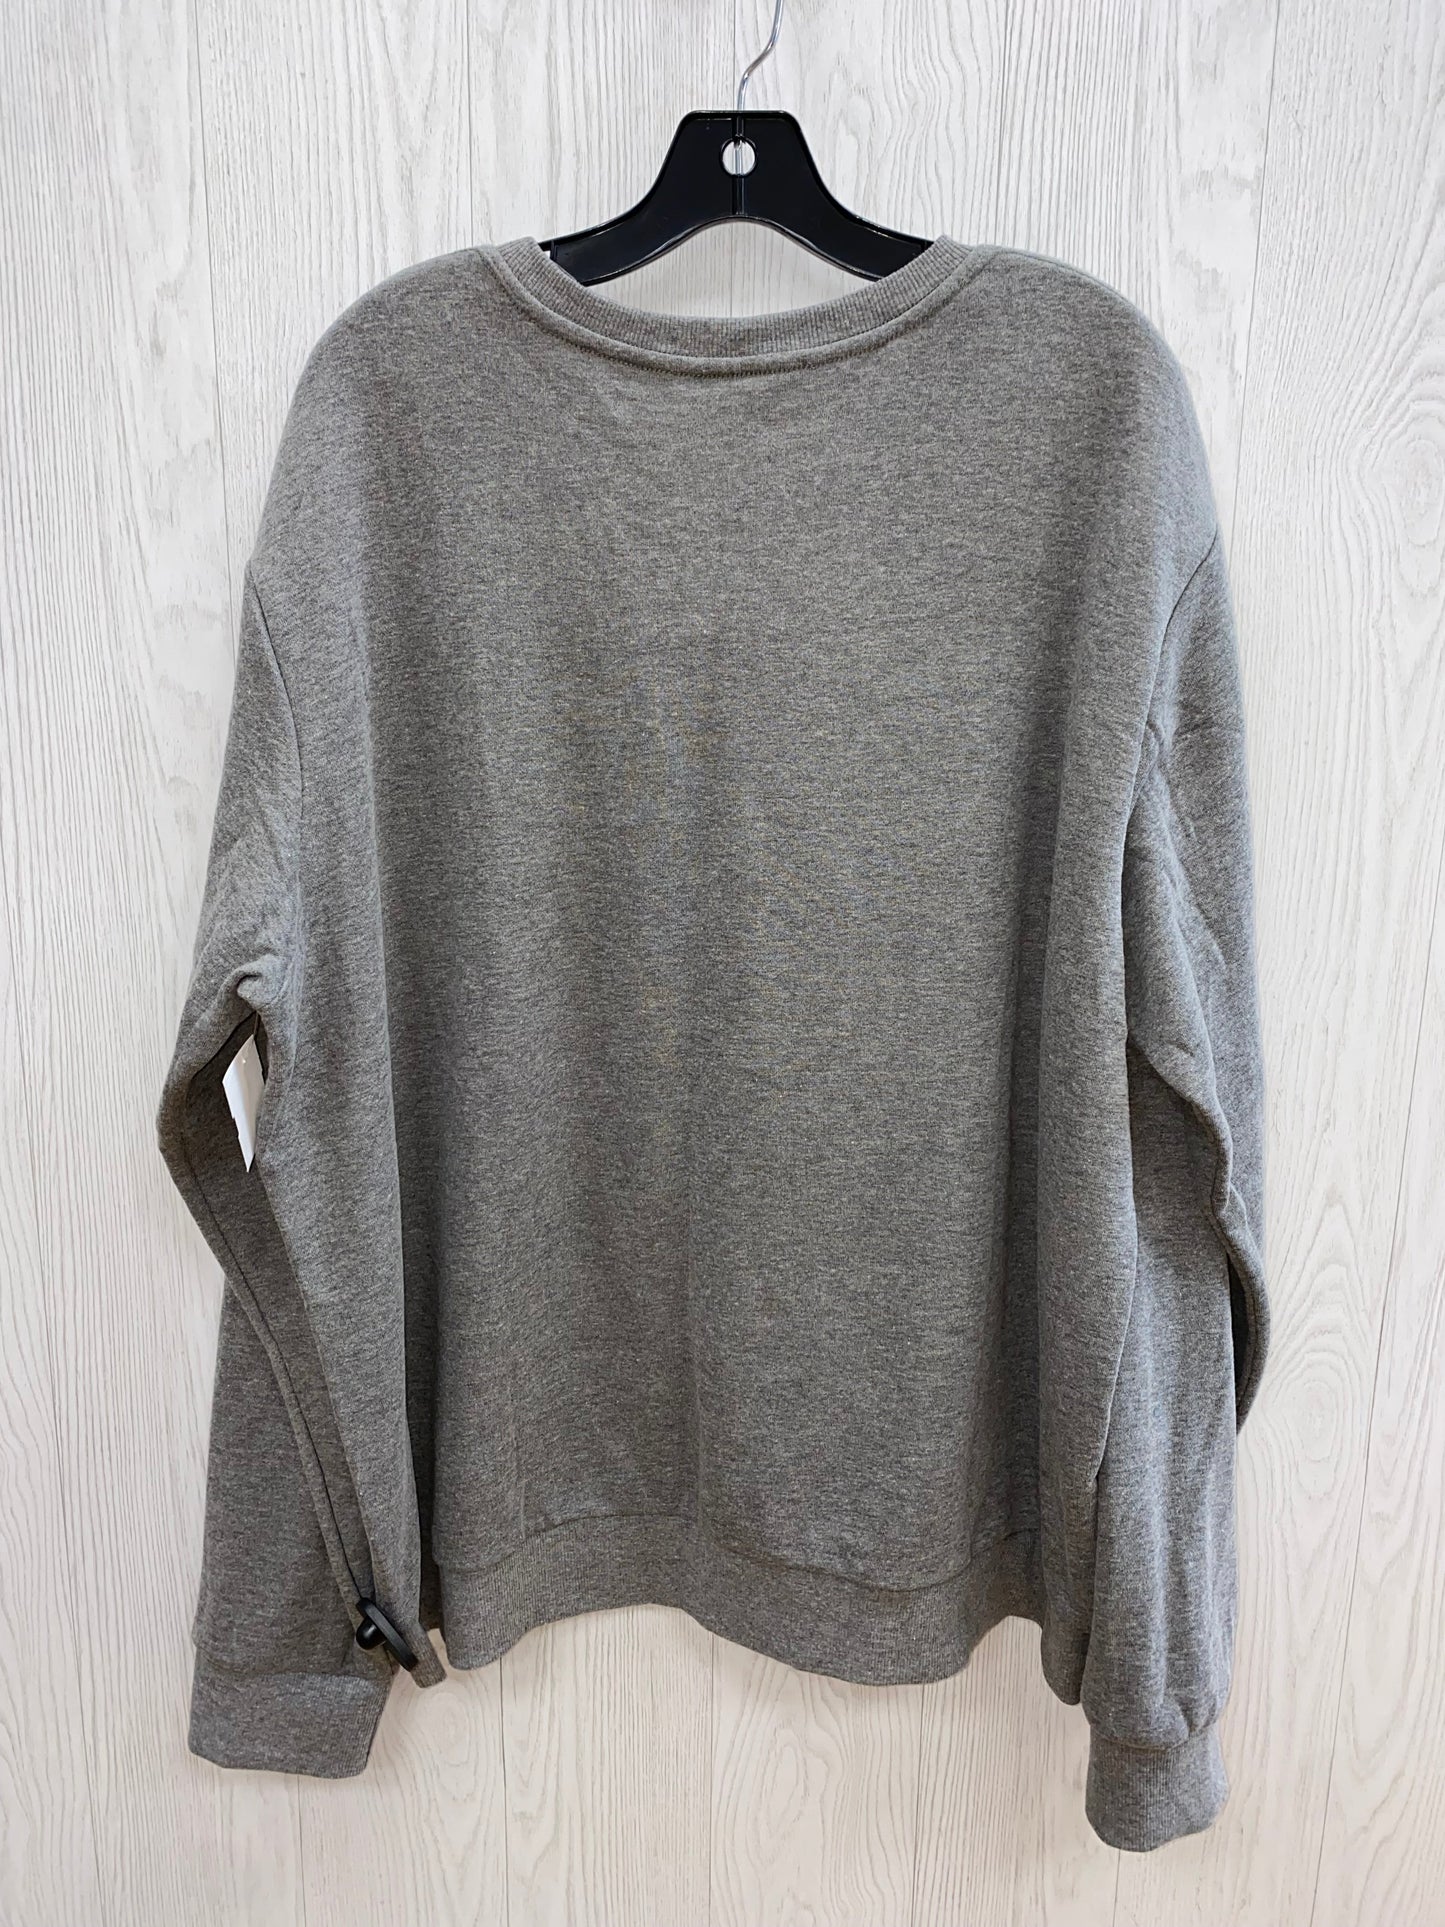 Grey Sweatshirt Crewneck Clothes Mentor, Size Xxl